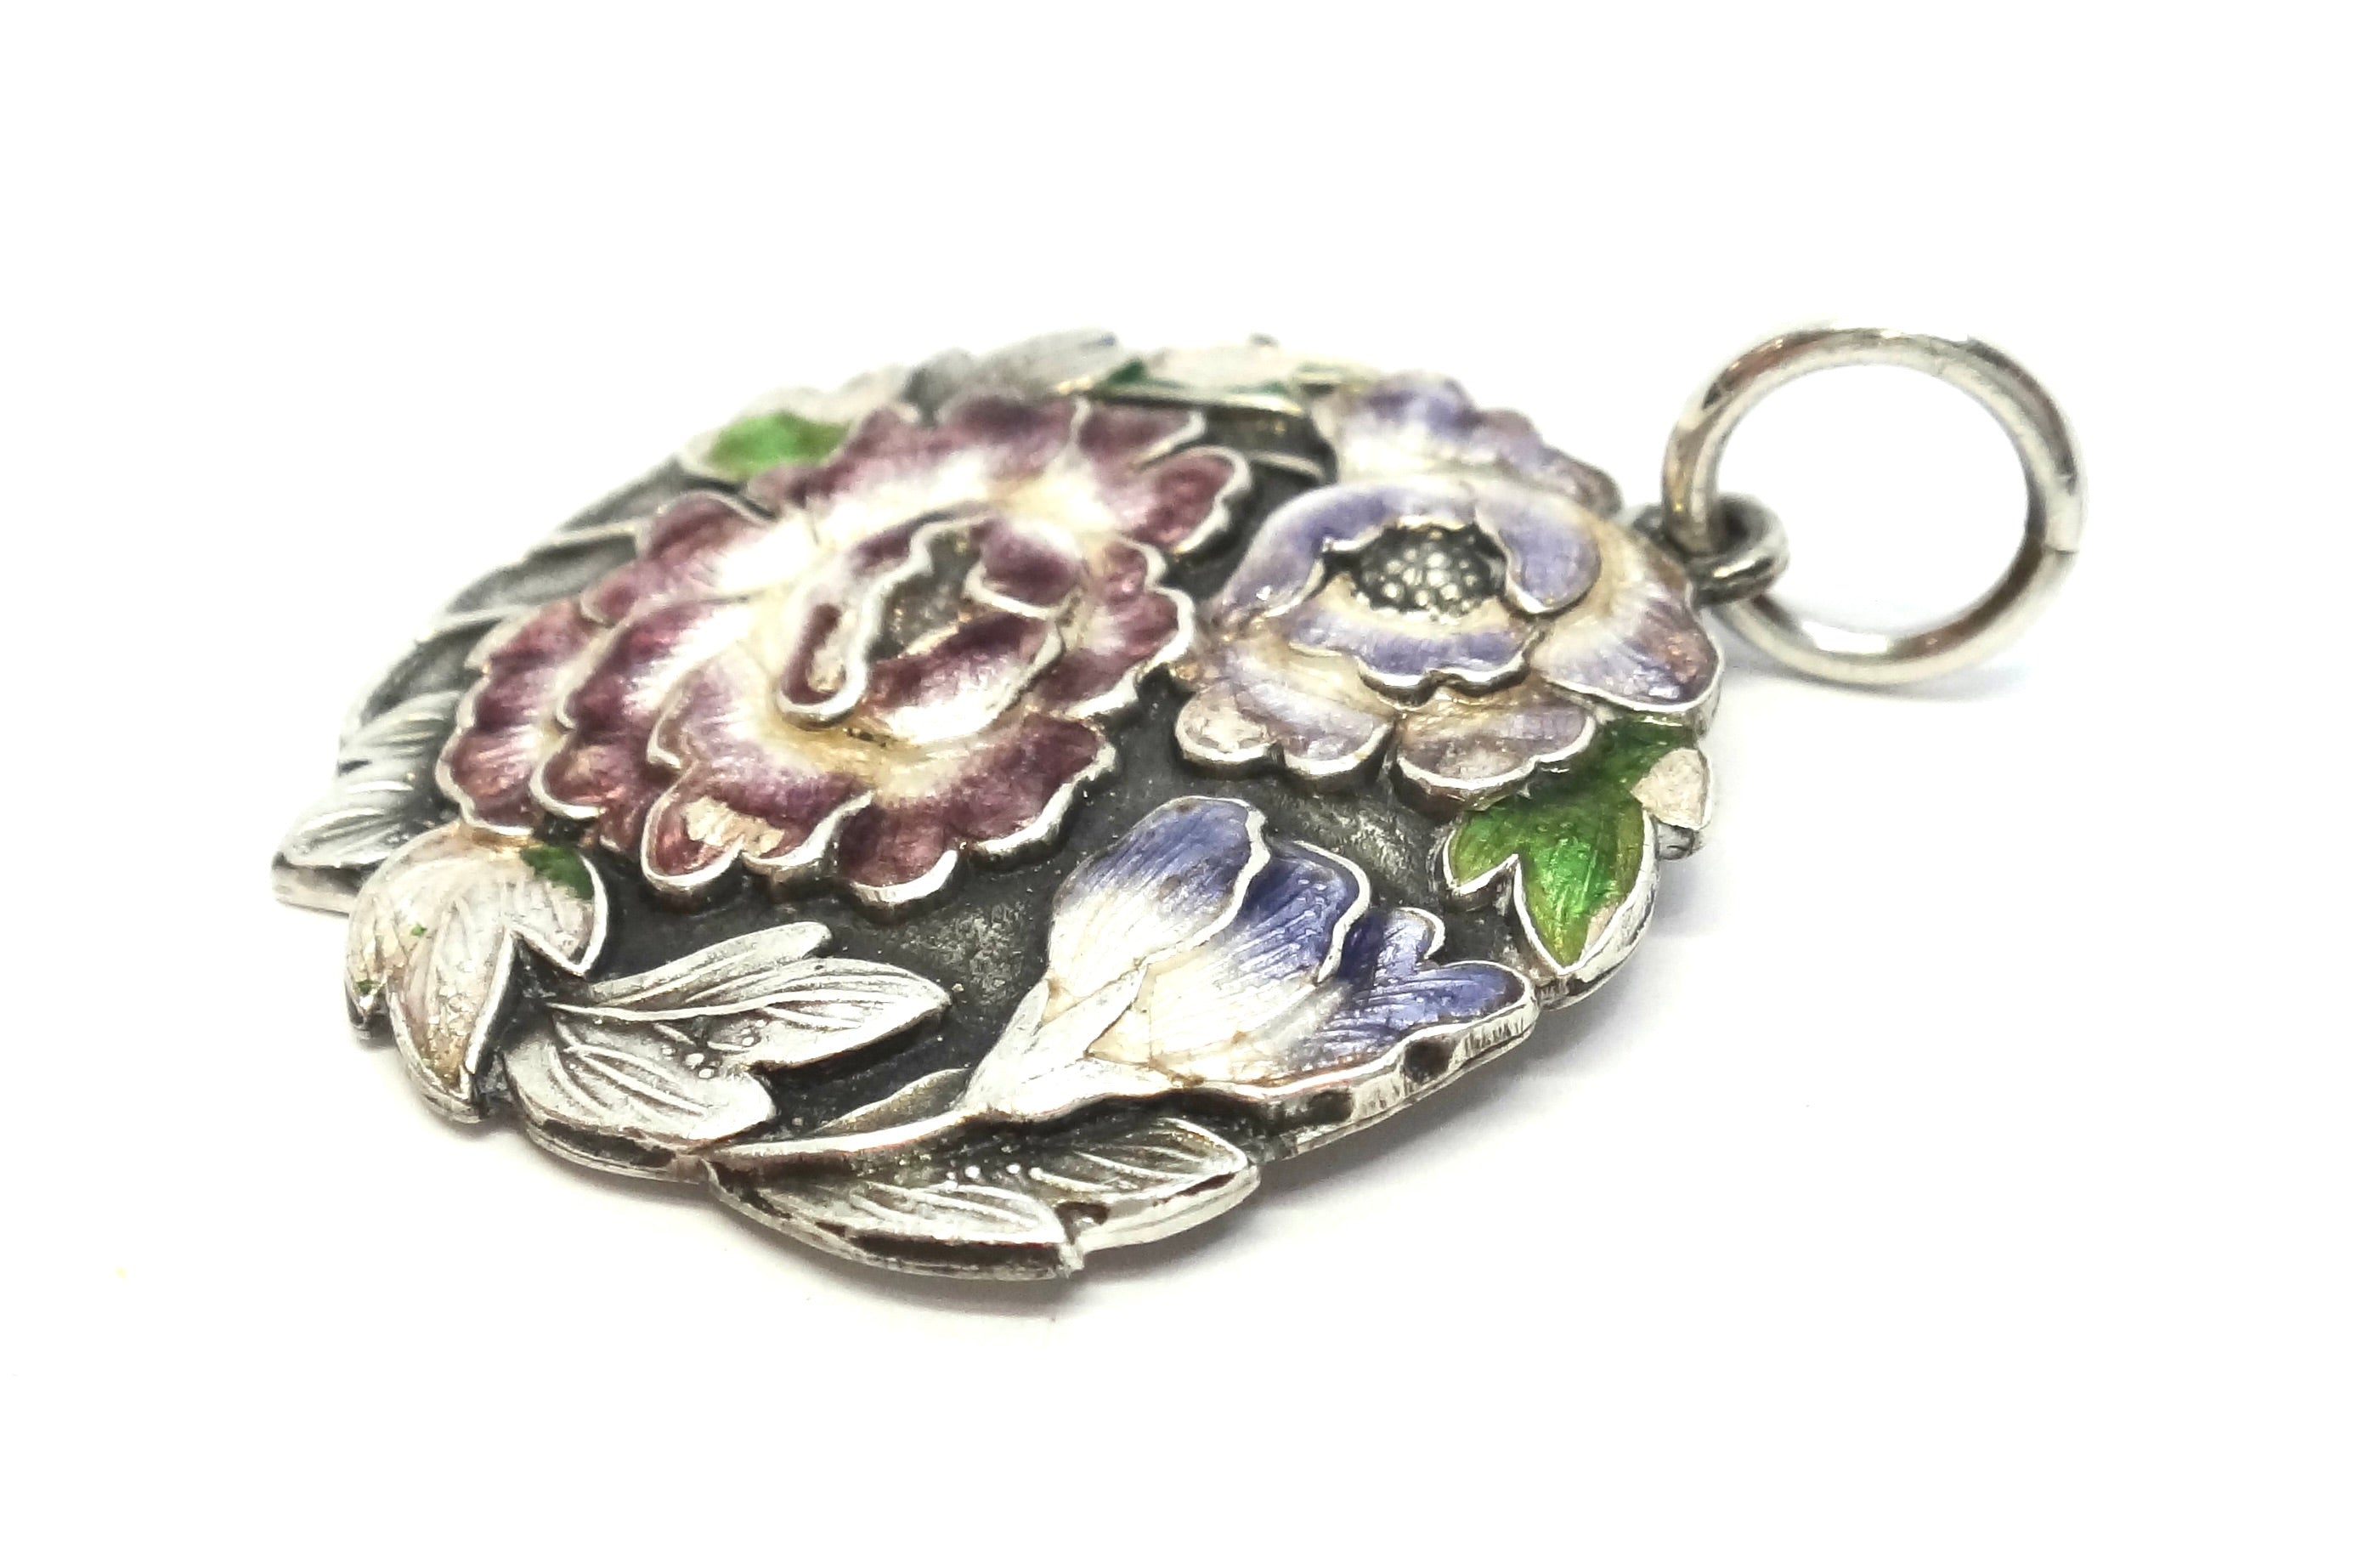 ANTIQUE Japanese Made Silver & Enamel Floral Pendant c.1890